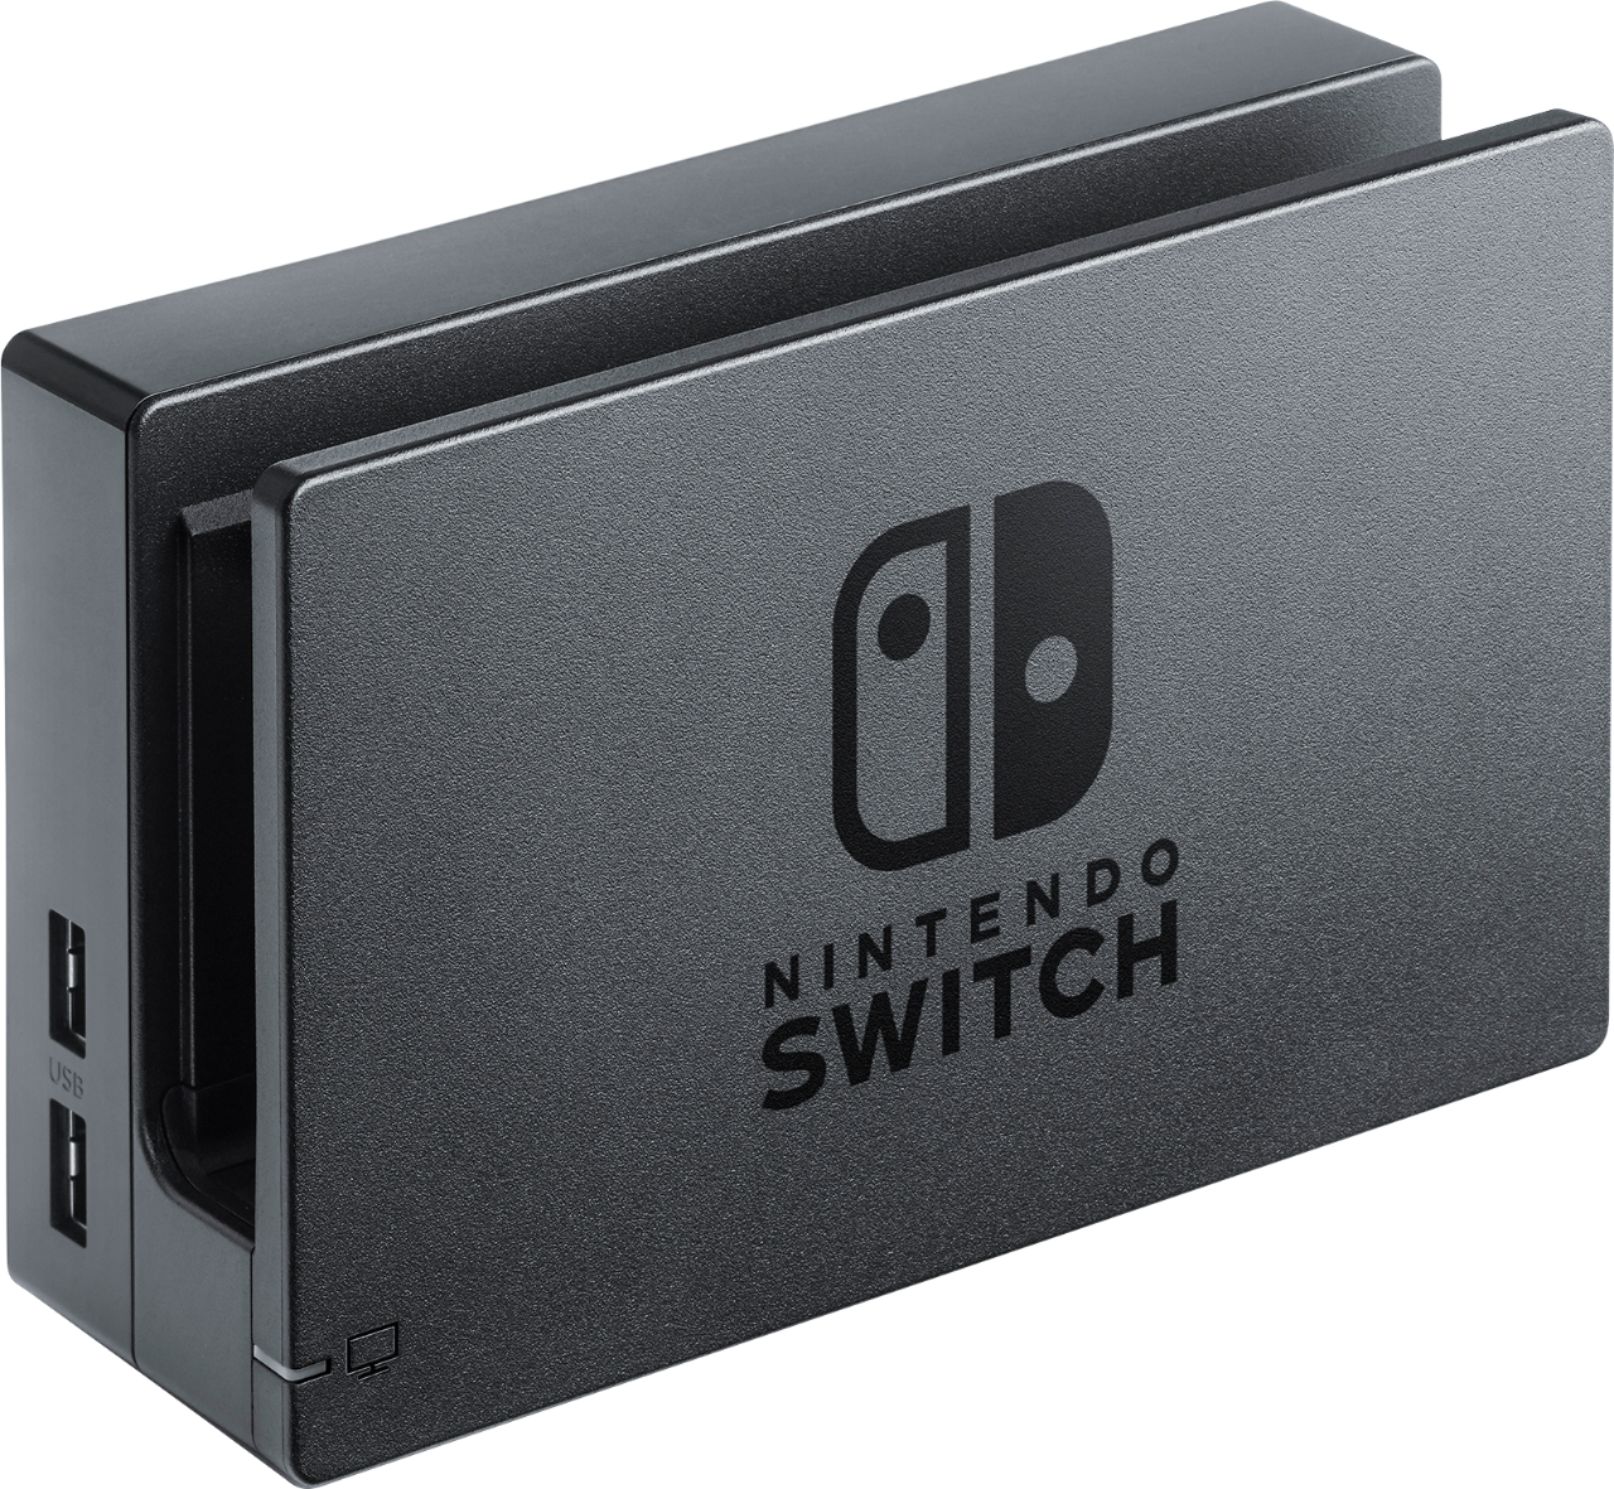 where to buy nintendo switch dock